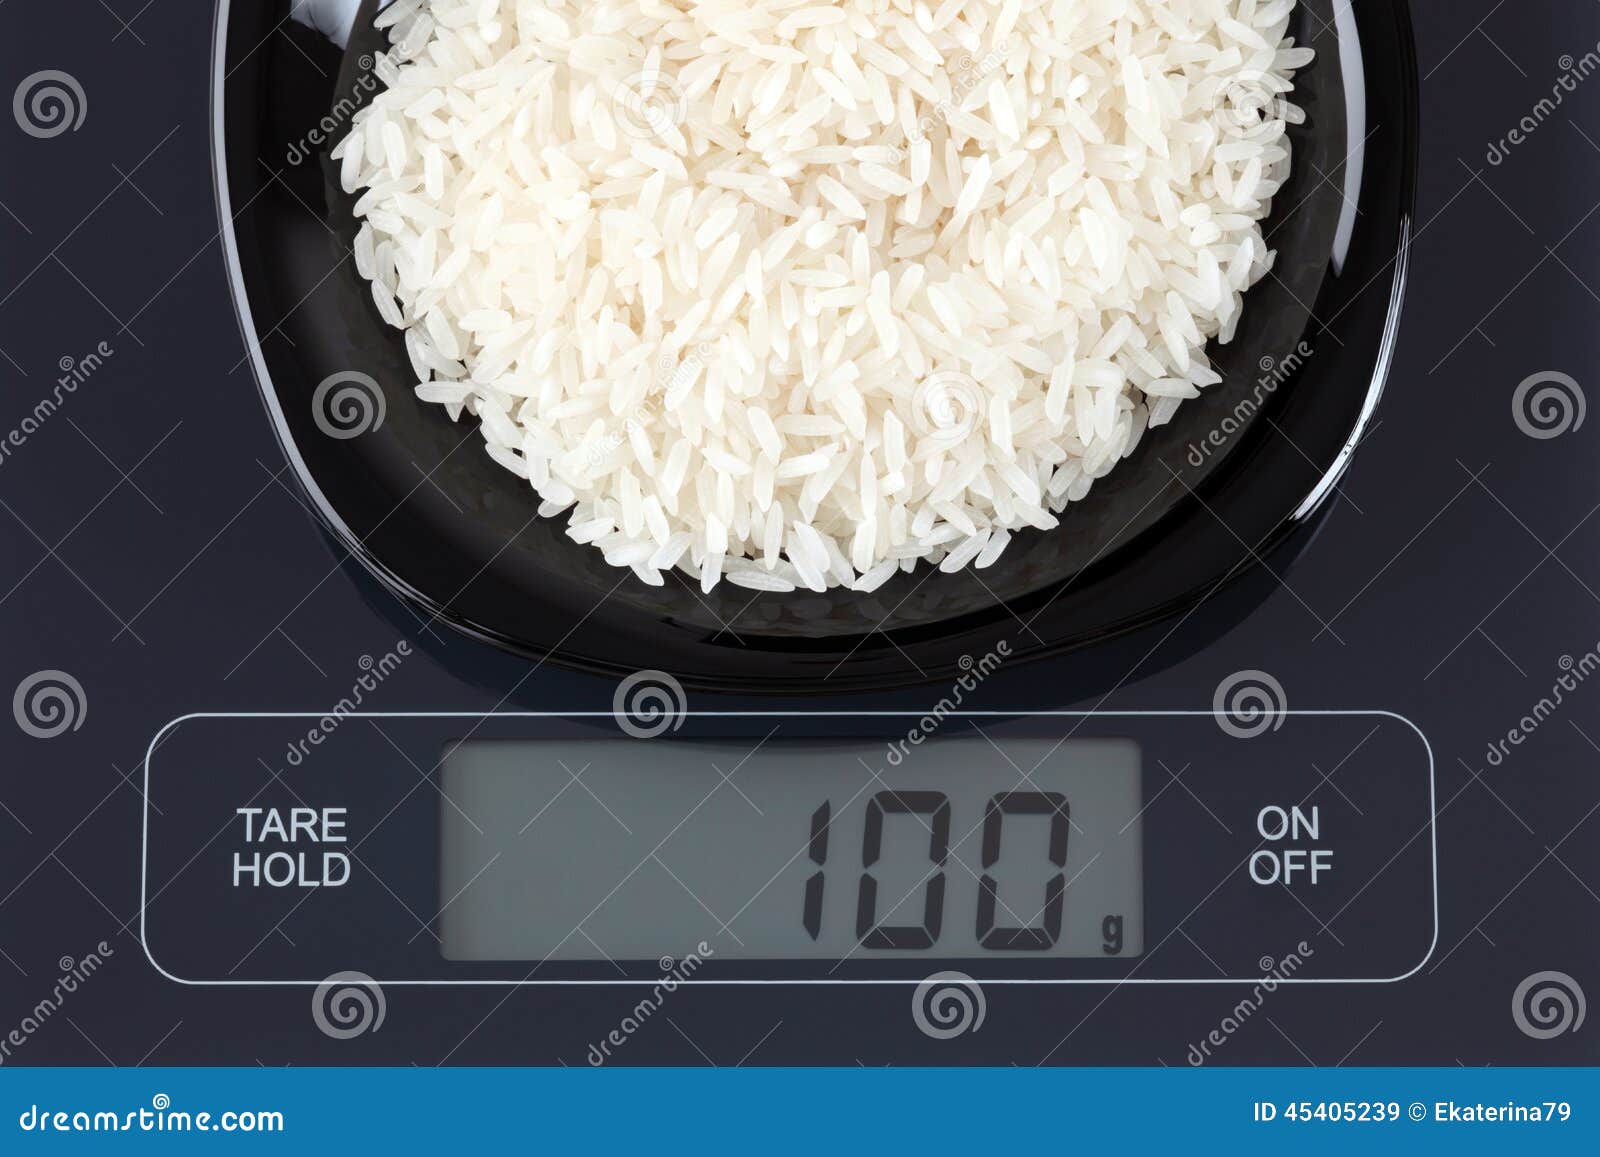 Порция риса в столовой сколько грамм. 100 Грамм риса. 100 Грамм риса на тарелке. 100 Грамм отварного риск. 100 Грамм варного Рисп.